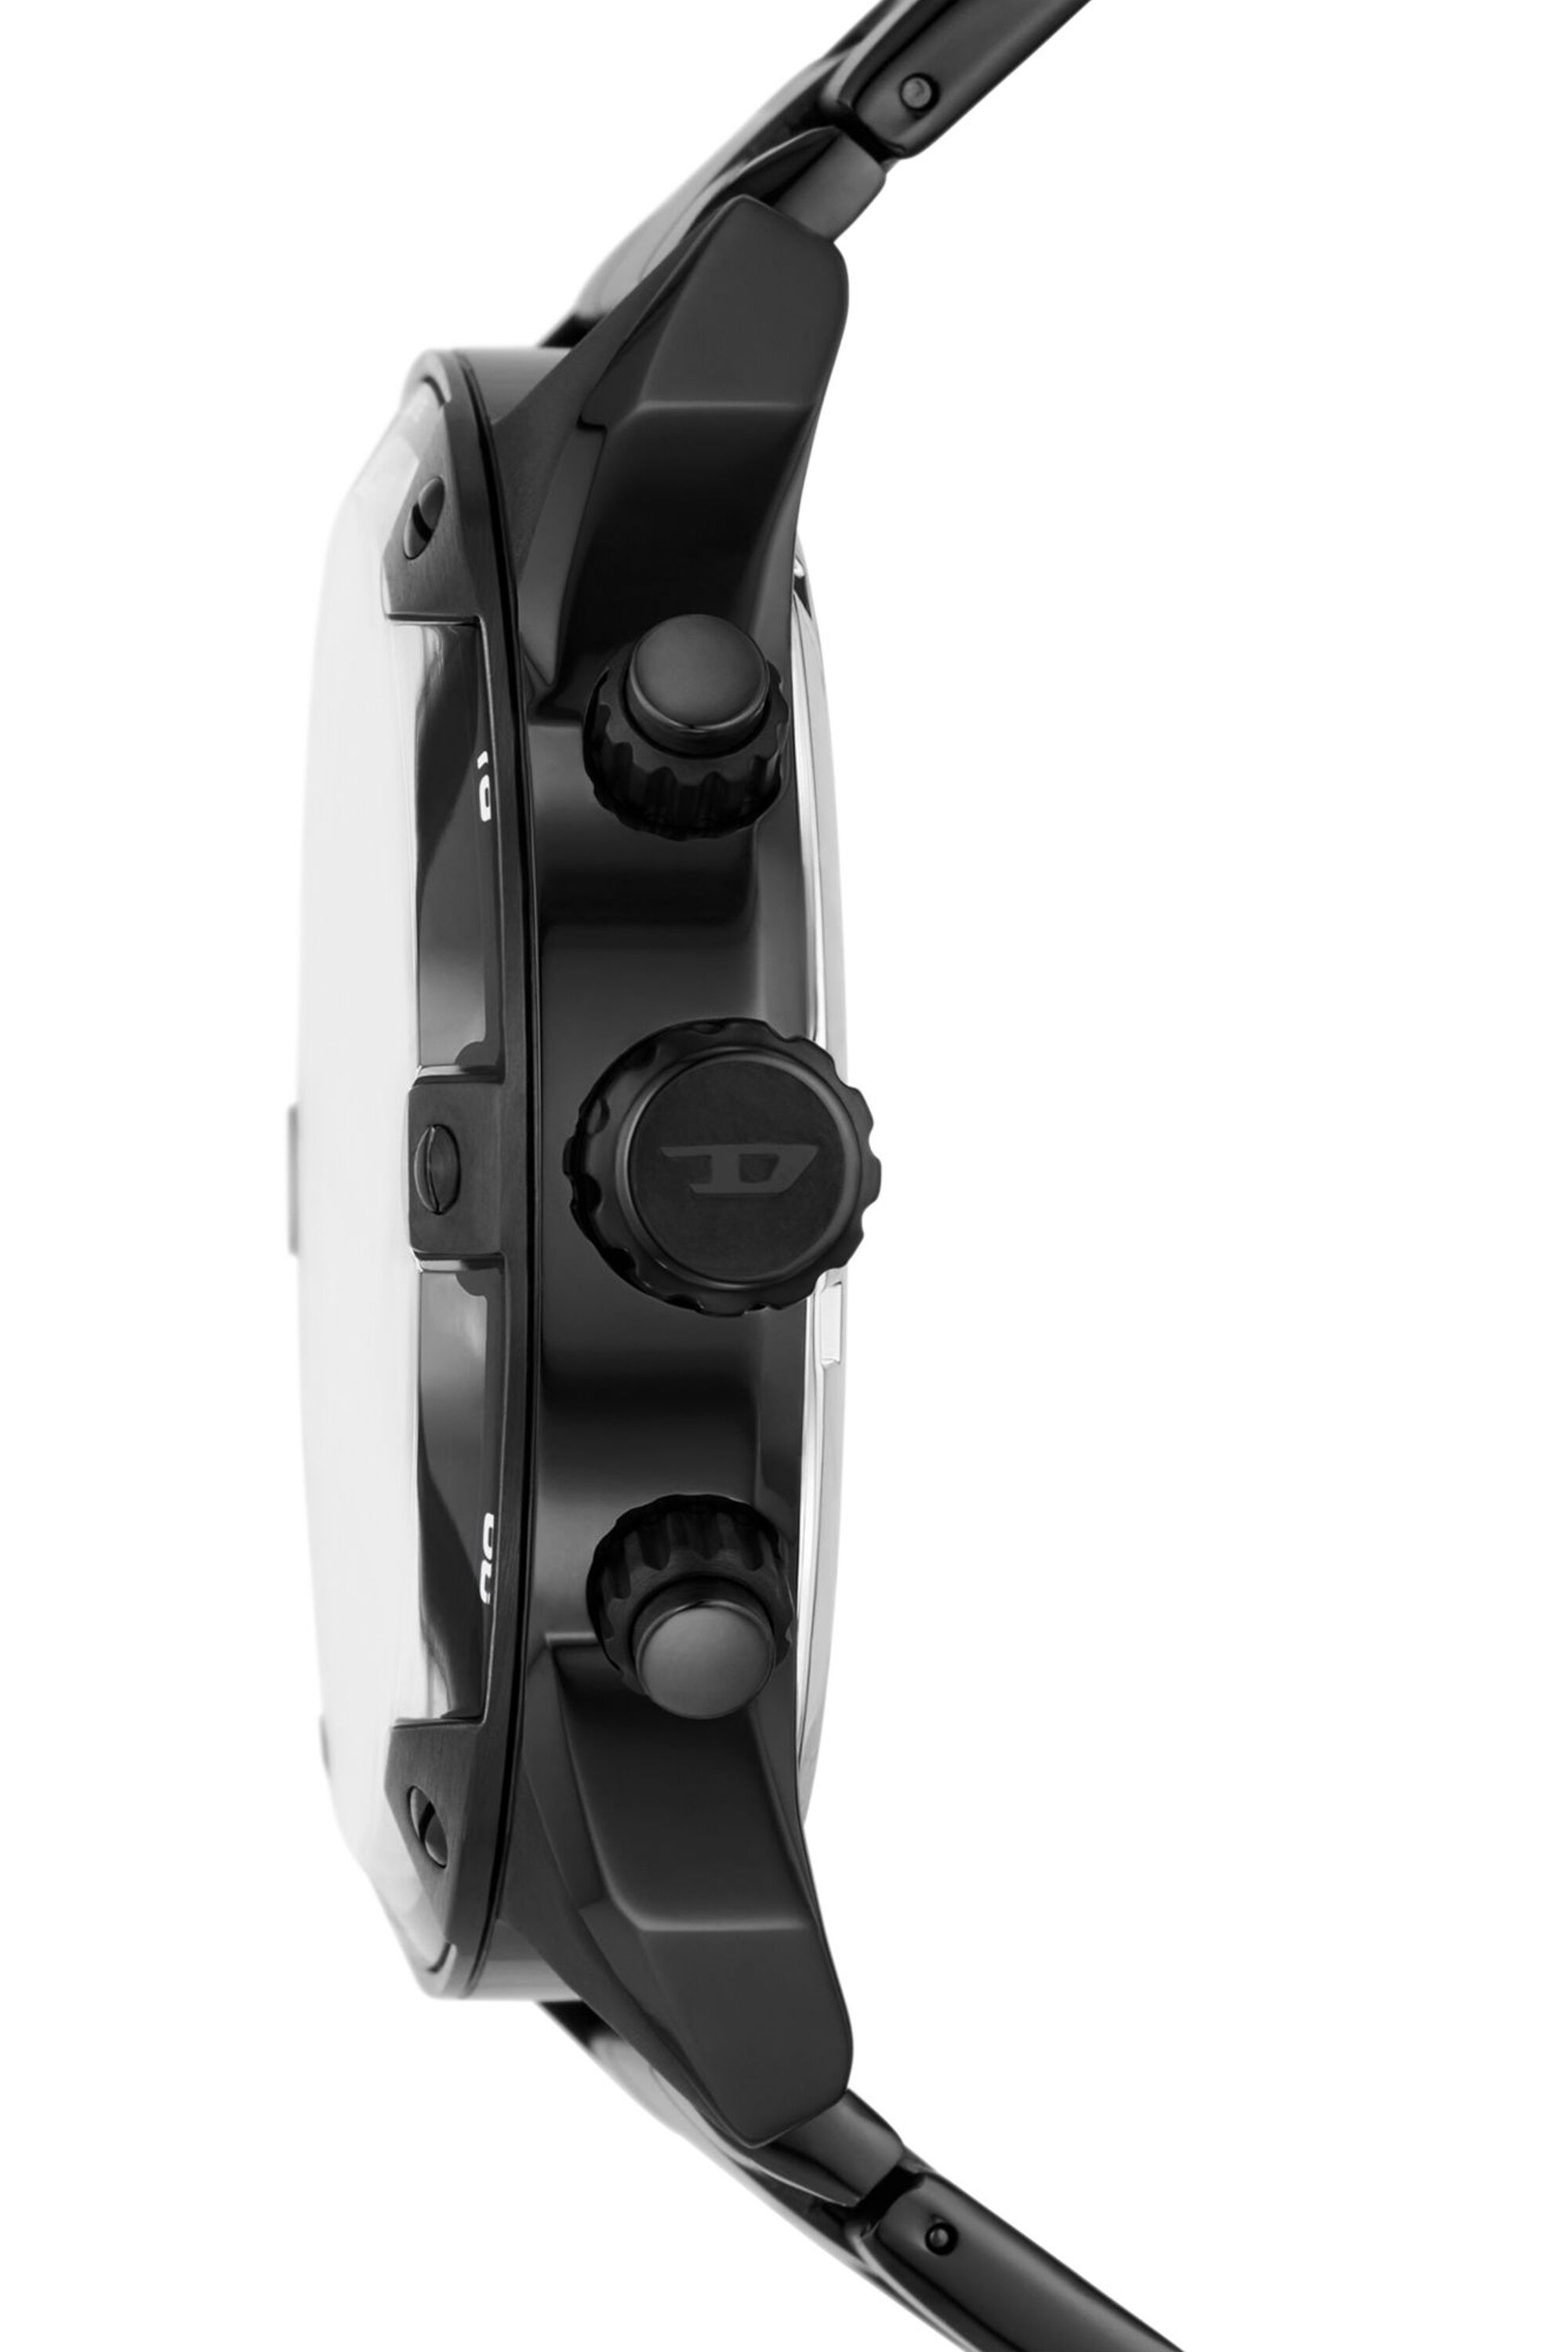 Men's Spiked chronograph black stainless steel watch | Black | Diesel